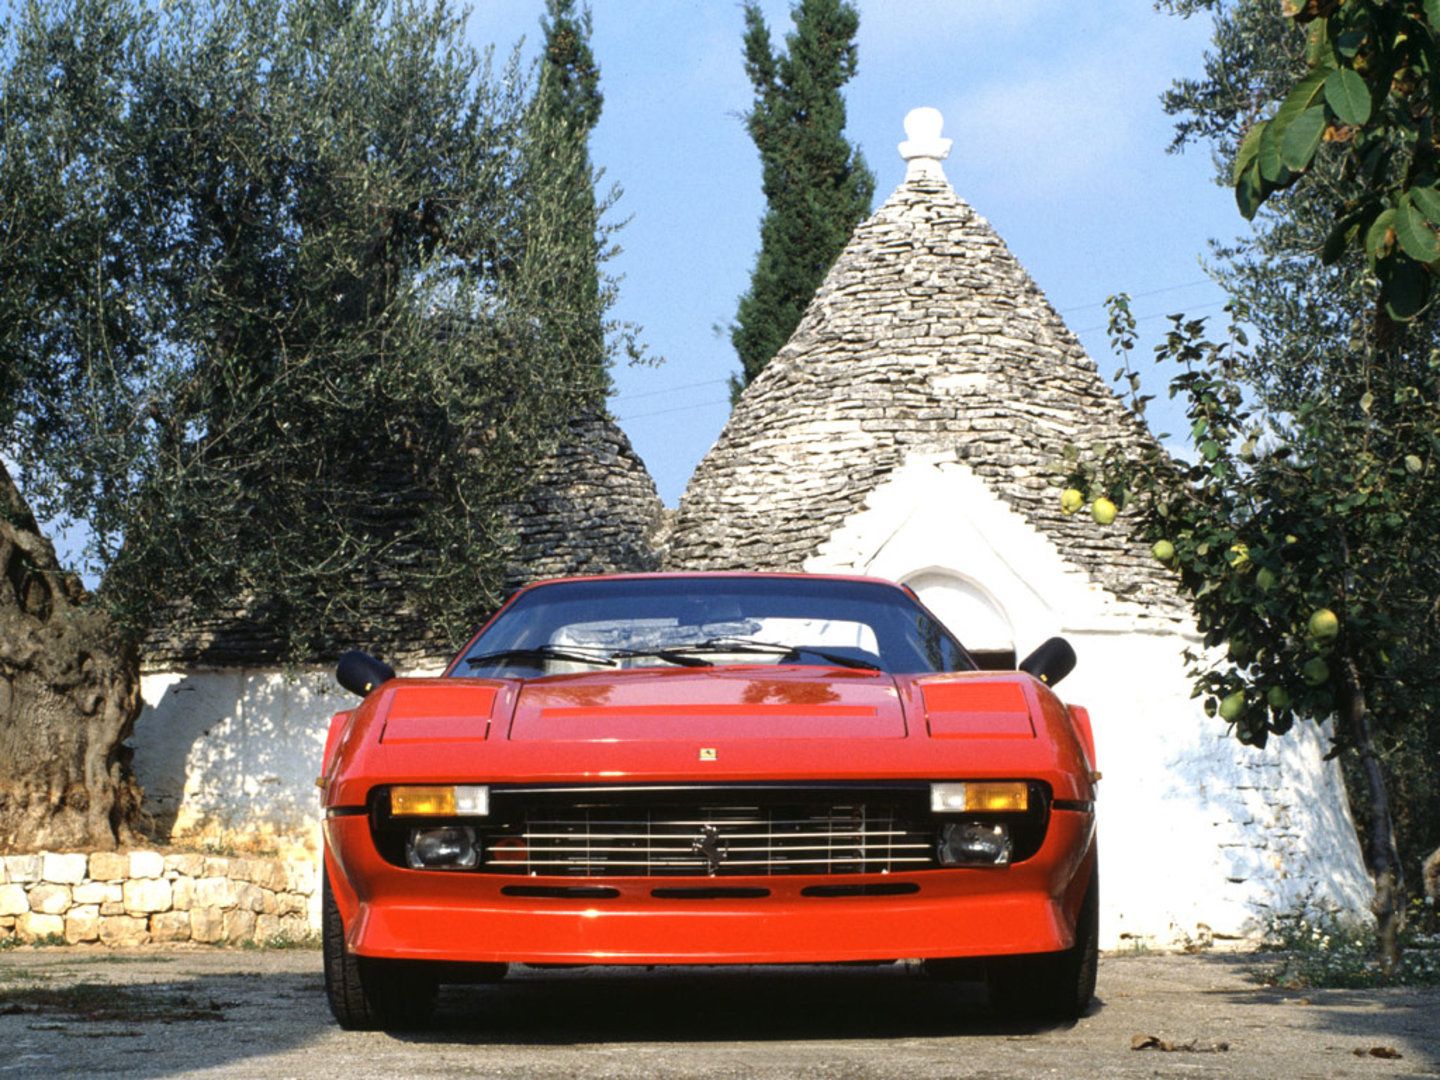 1982 - 1985 Ferrari 308 GTB Quattrovalvole